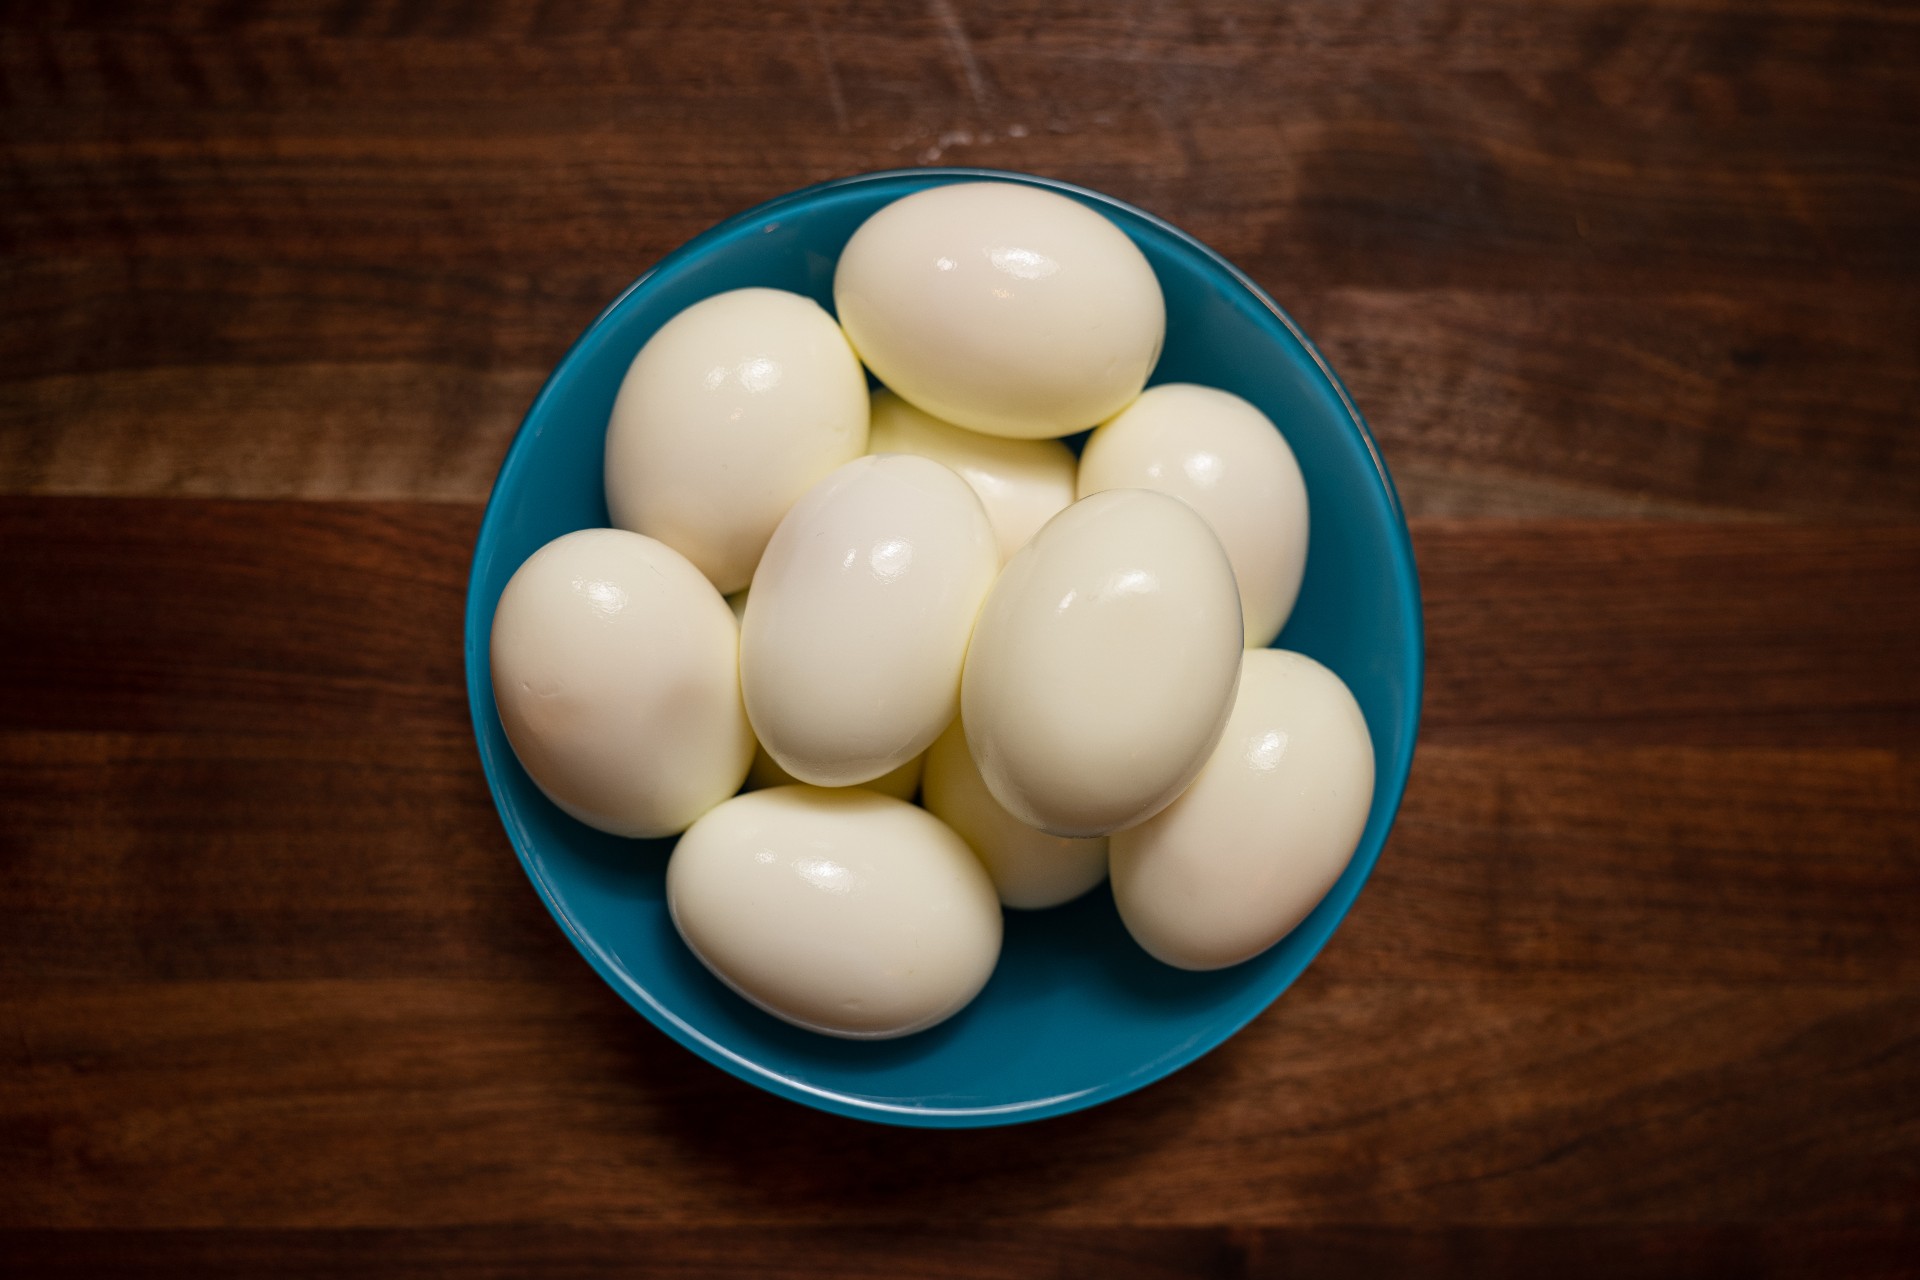 Easy-peel hard-boiled eggs in a bowl.